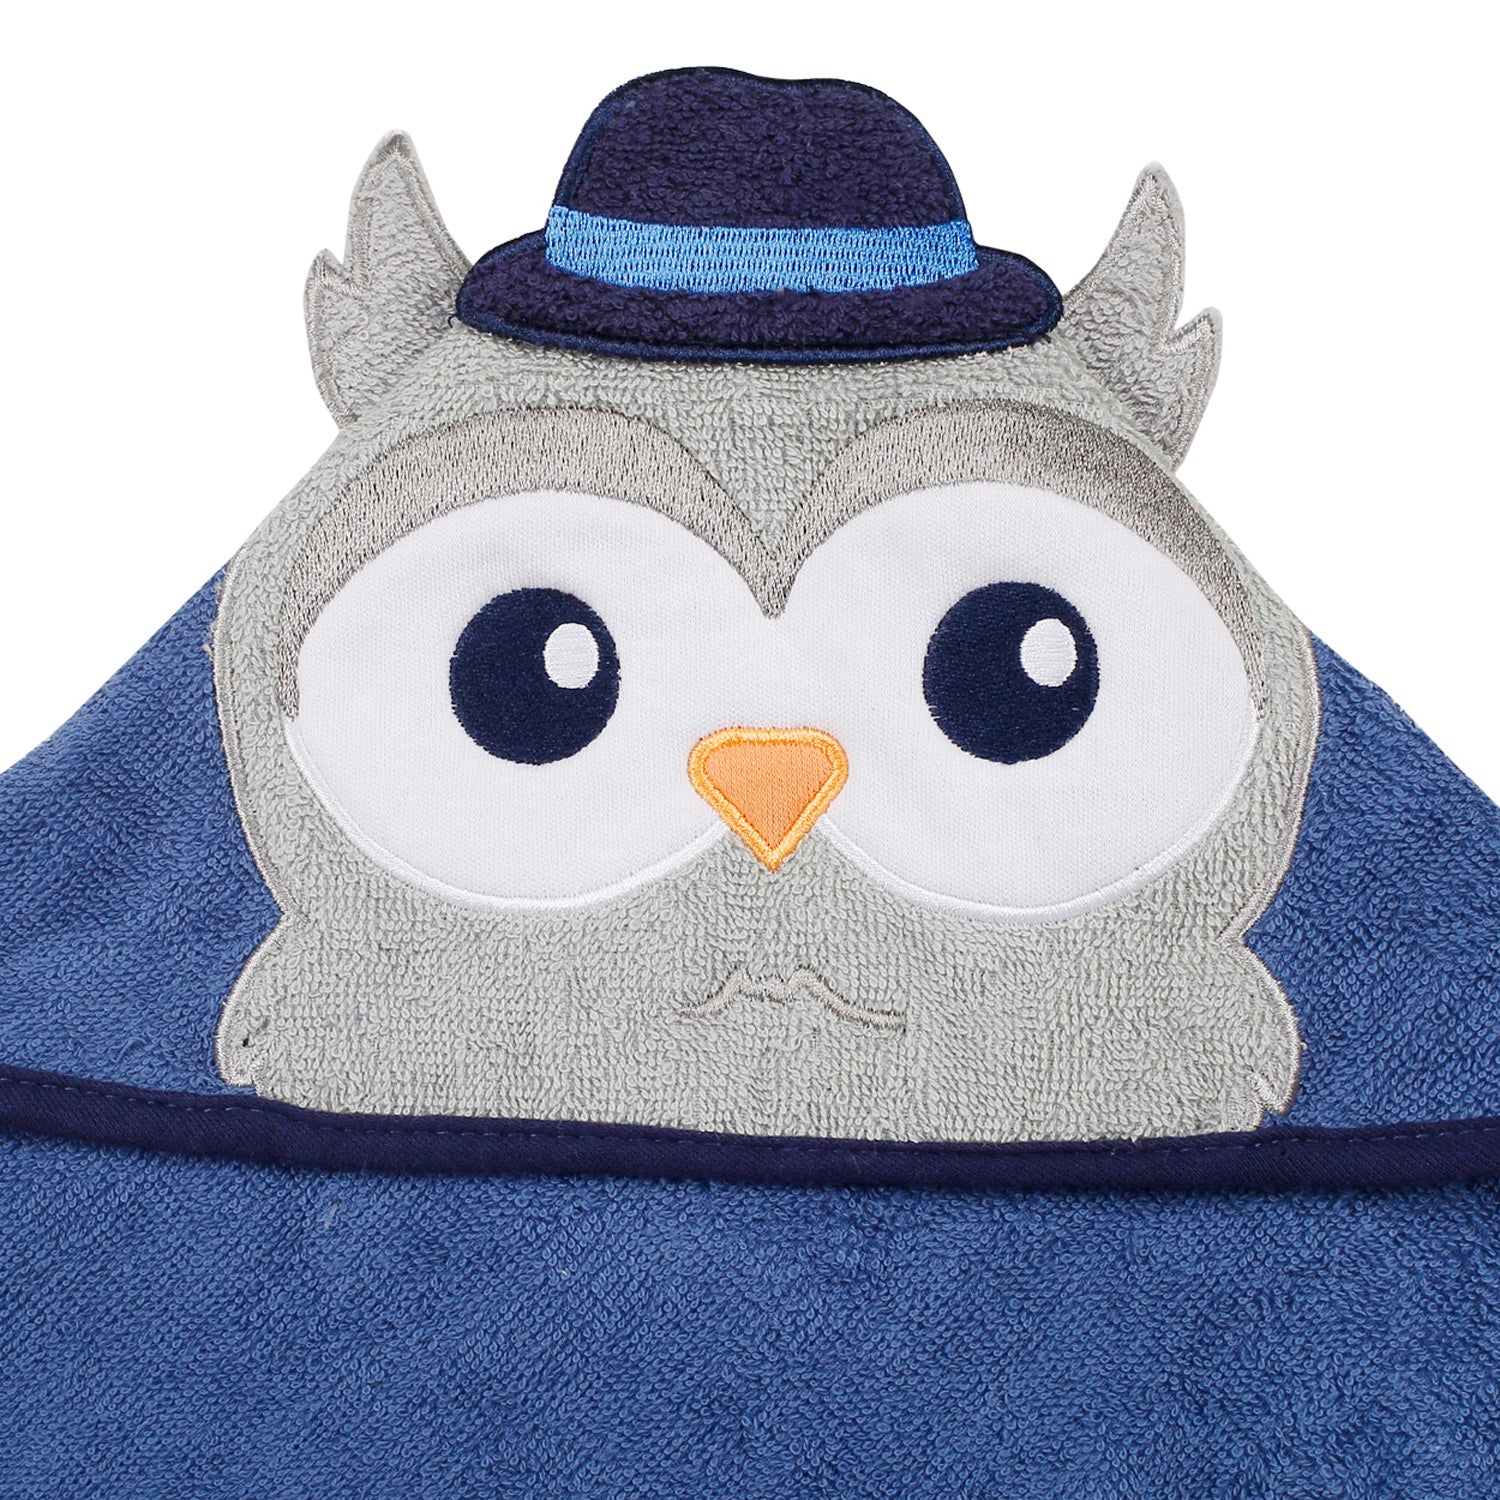 Mr. Owl Blue Hooded Towel